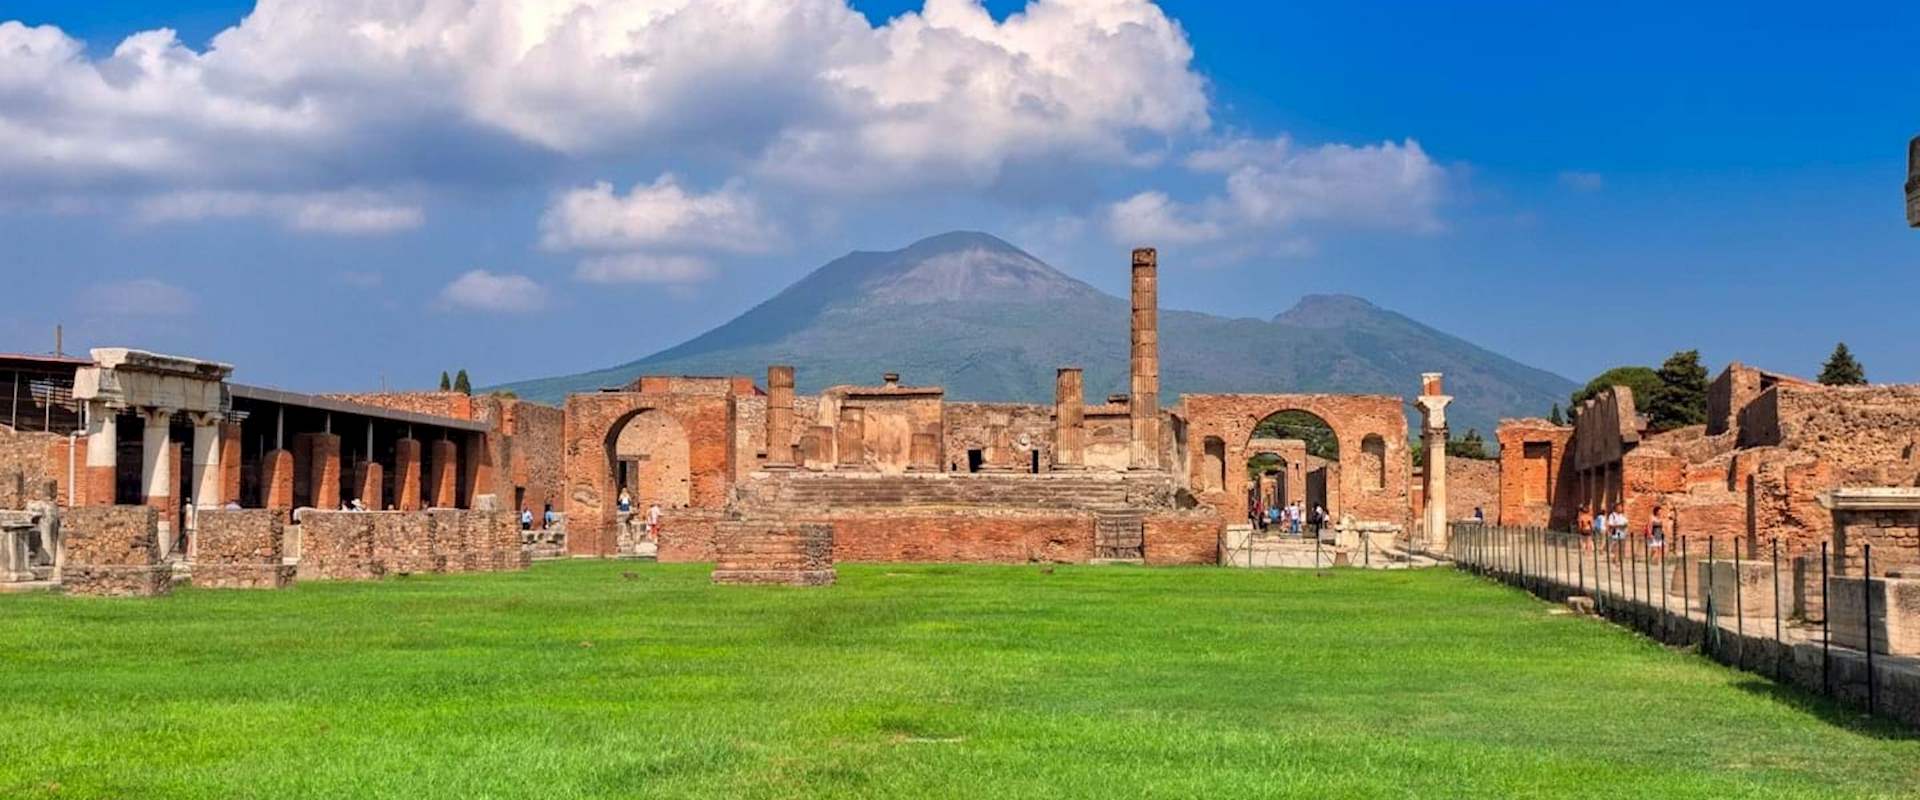 pompeii and mt vesuvius tour from sorrento